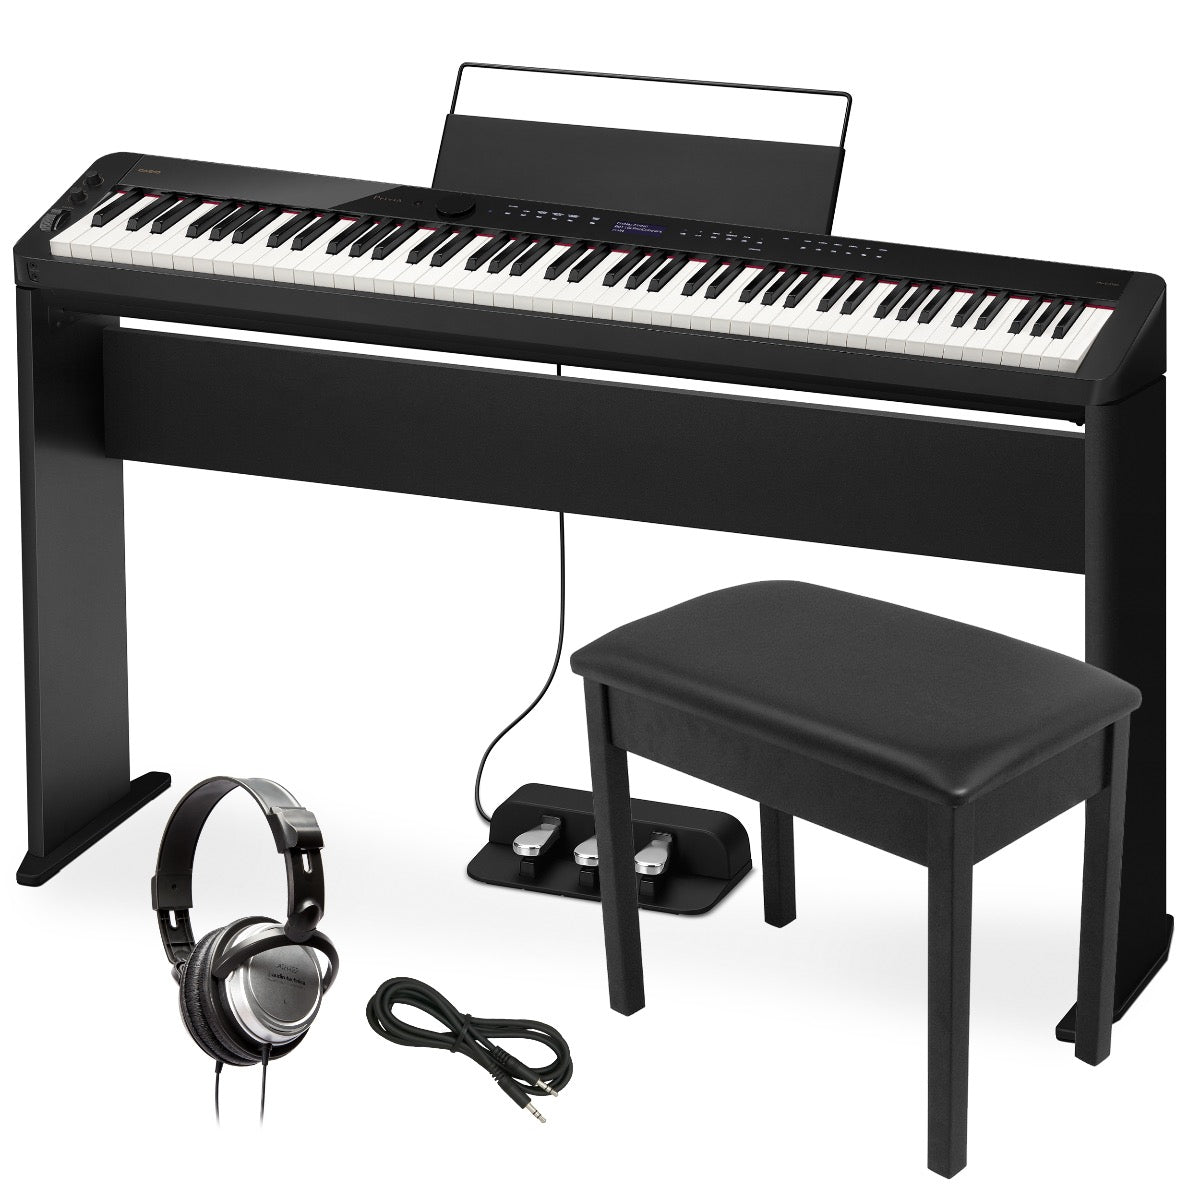 Casio PX-S3100 Digital Piano - Black COMPLETE HOME BUNDLE